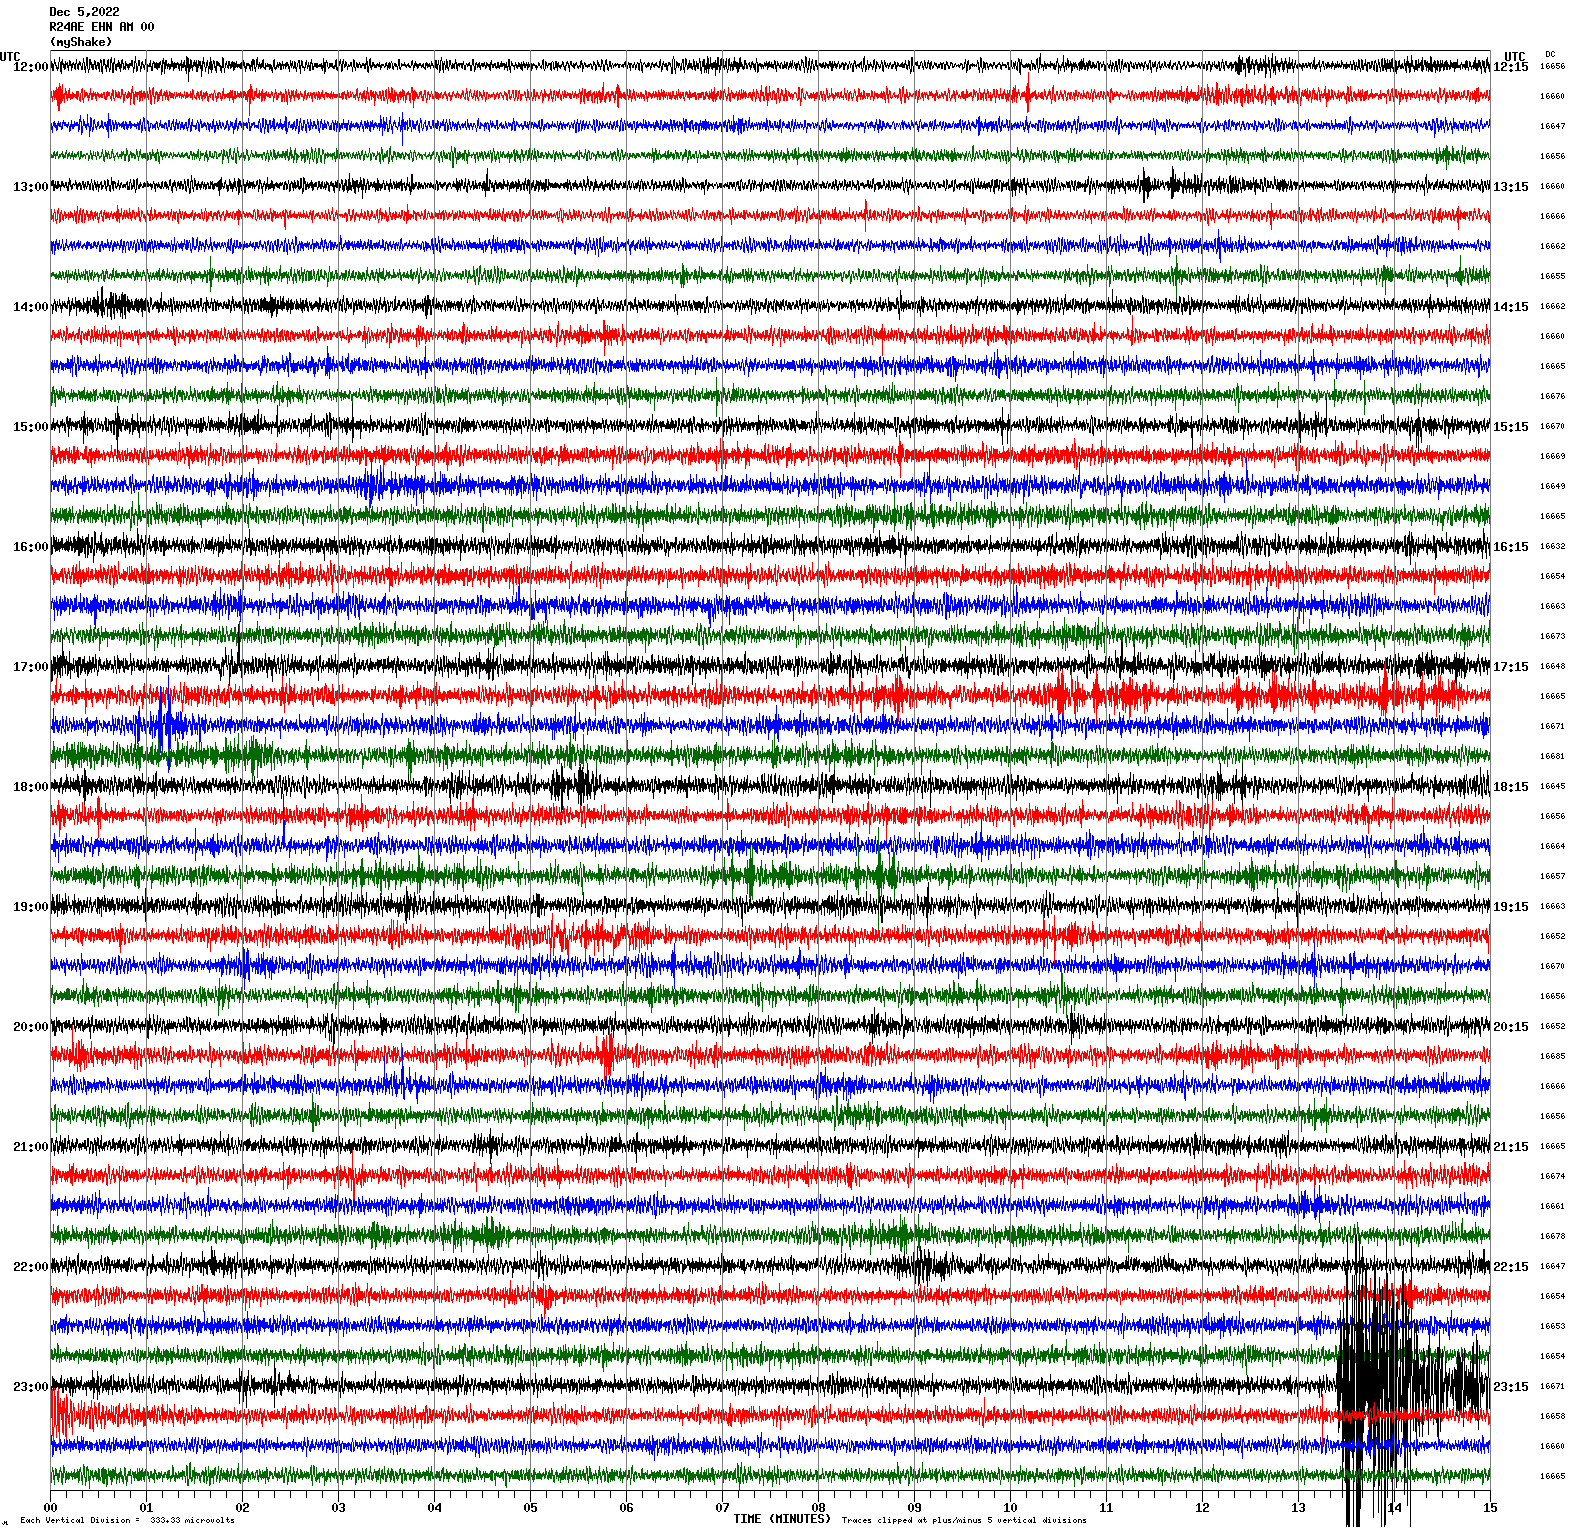 /seismic-data/R24AE/R24AE_EHN_AM_00.2022120512.gif